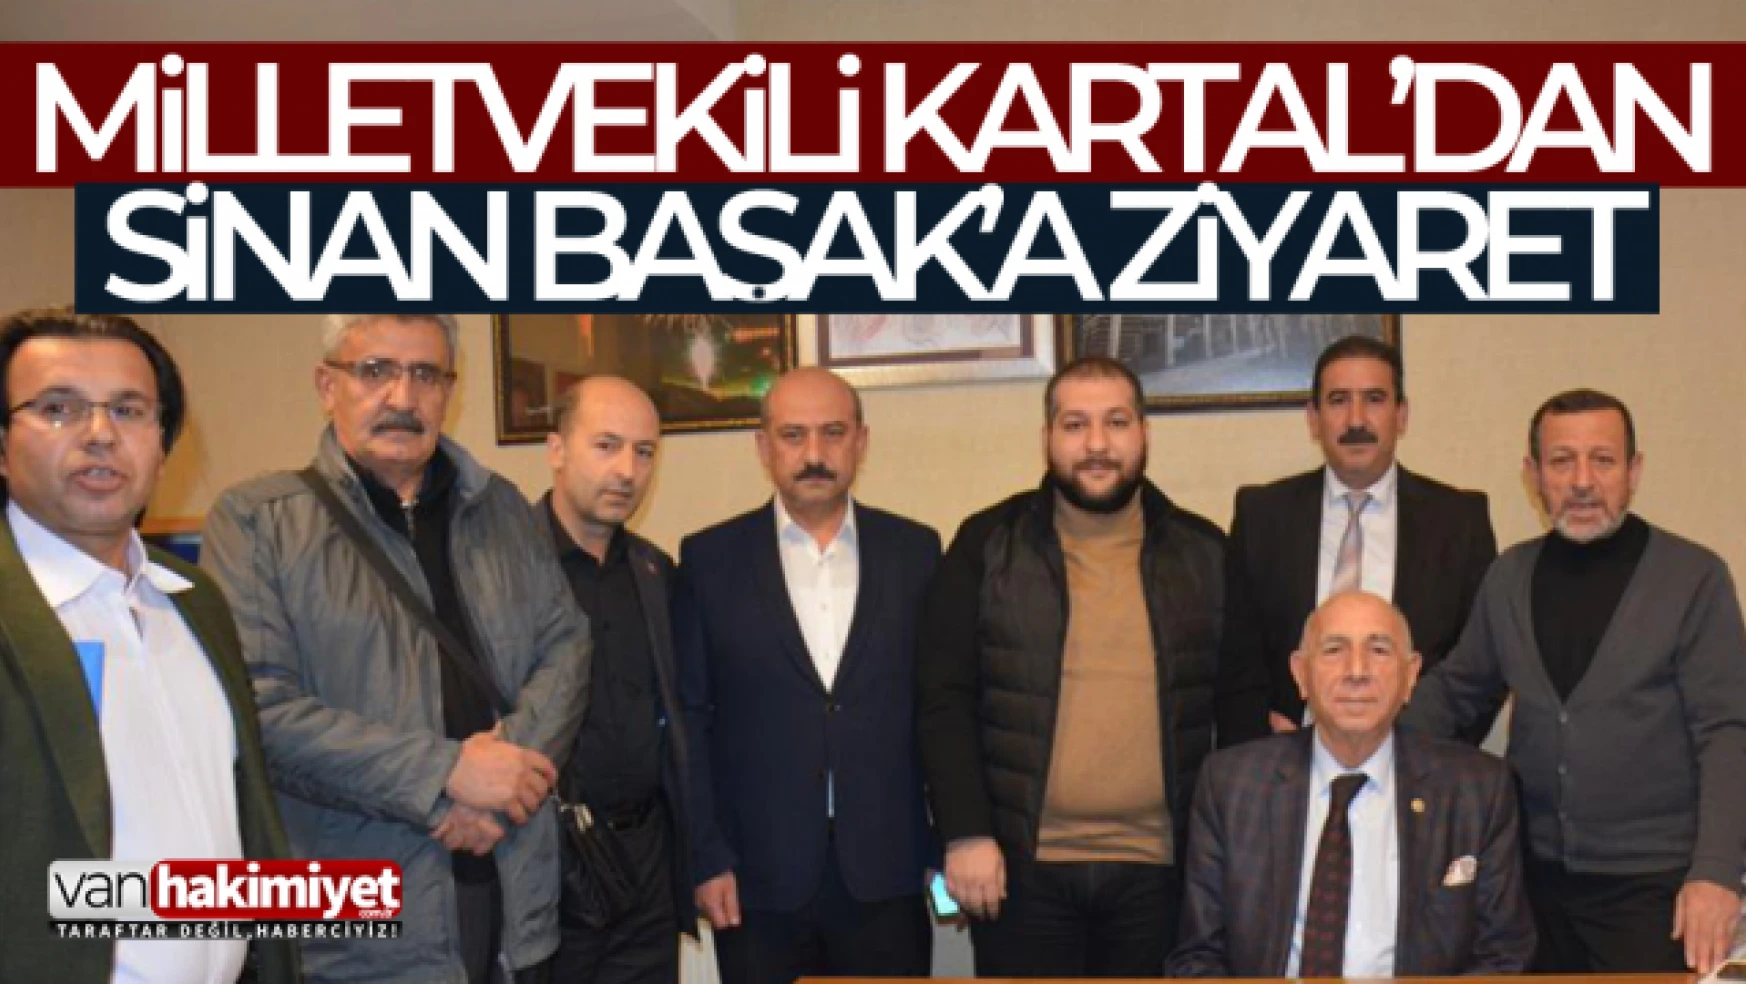 Milletvekili Kartal'dan tecrübeli siyasetçi Sinan Başak'a ziyaret